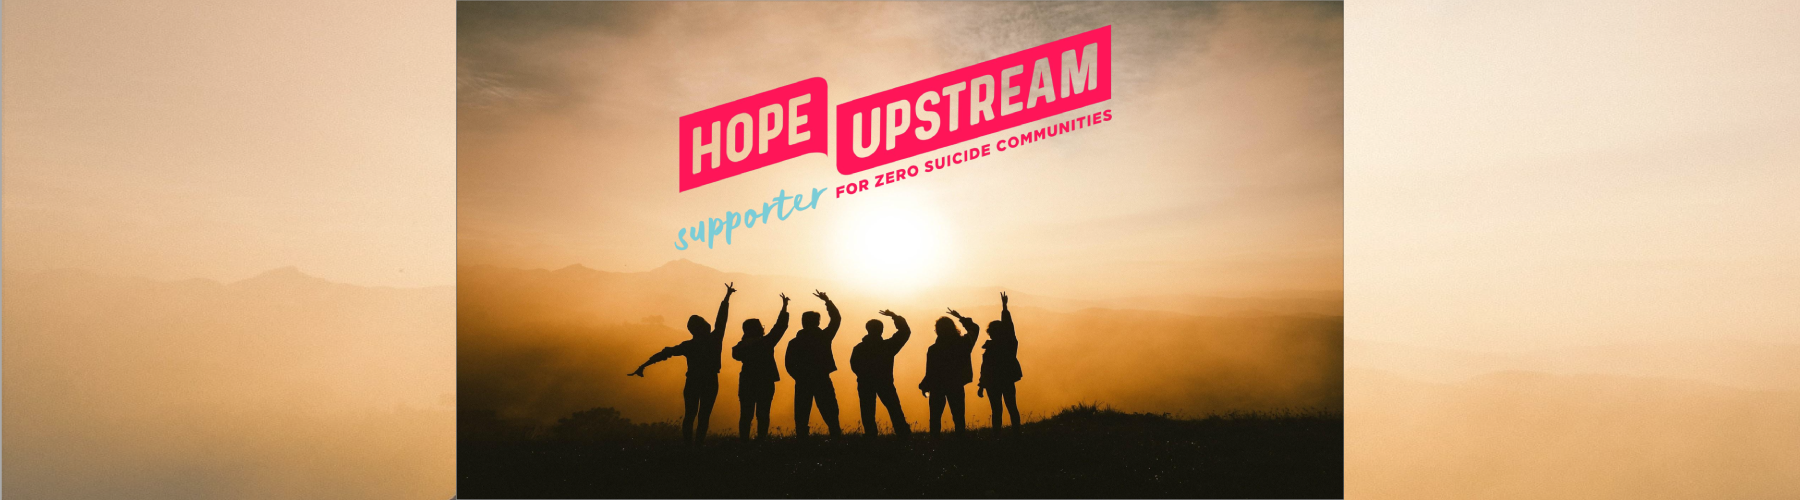 hope upstream event